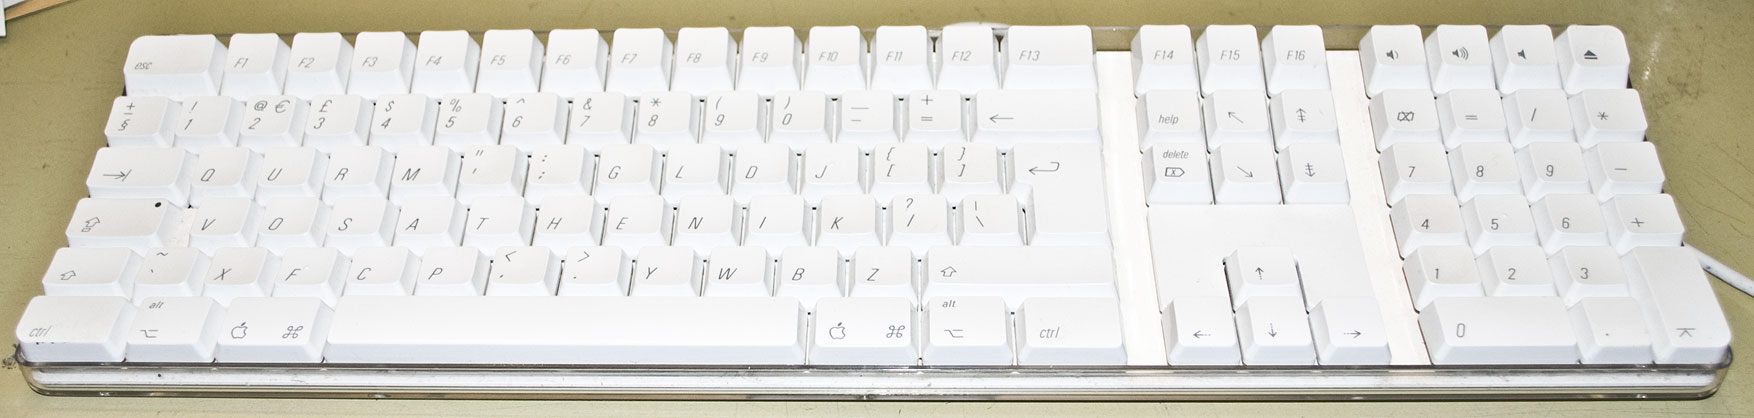 Apple USB Keyboard with Vosatheik-Q key arrangement